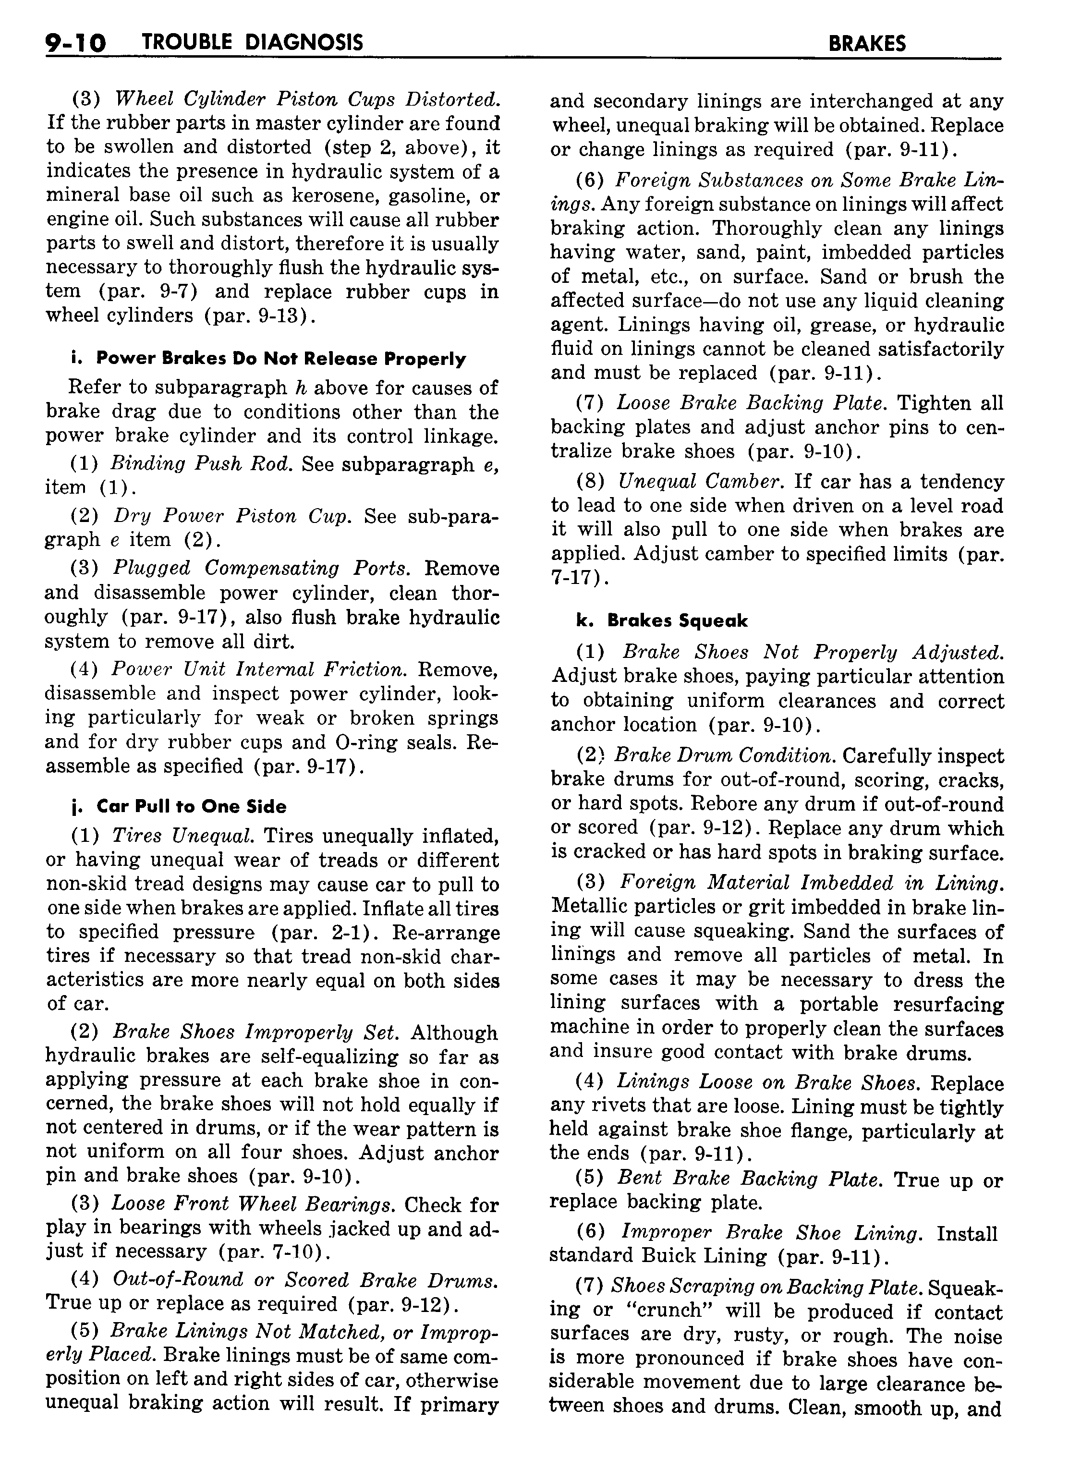 n_10 1957 Buick Shop Manual - Brakes-010-010.jpg